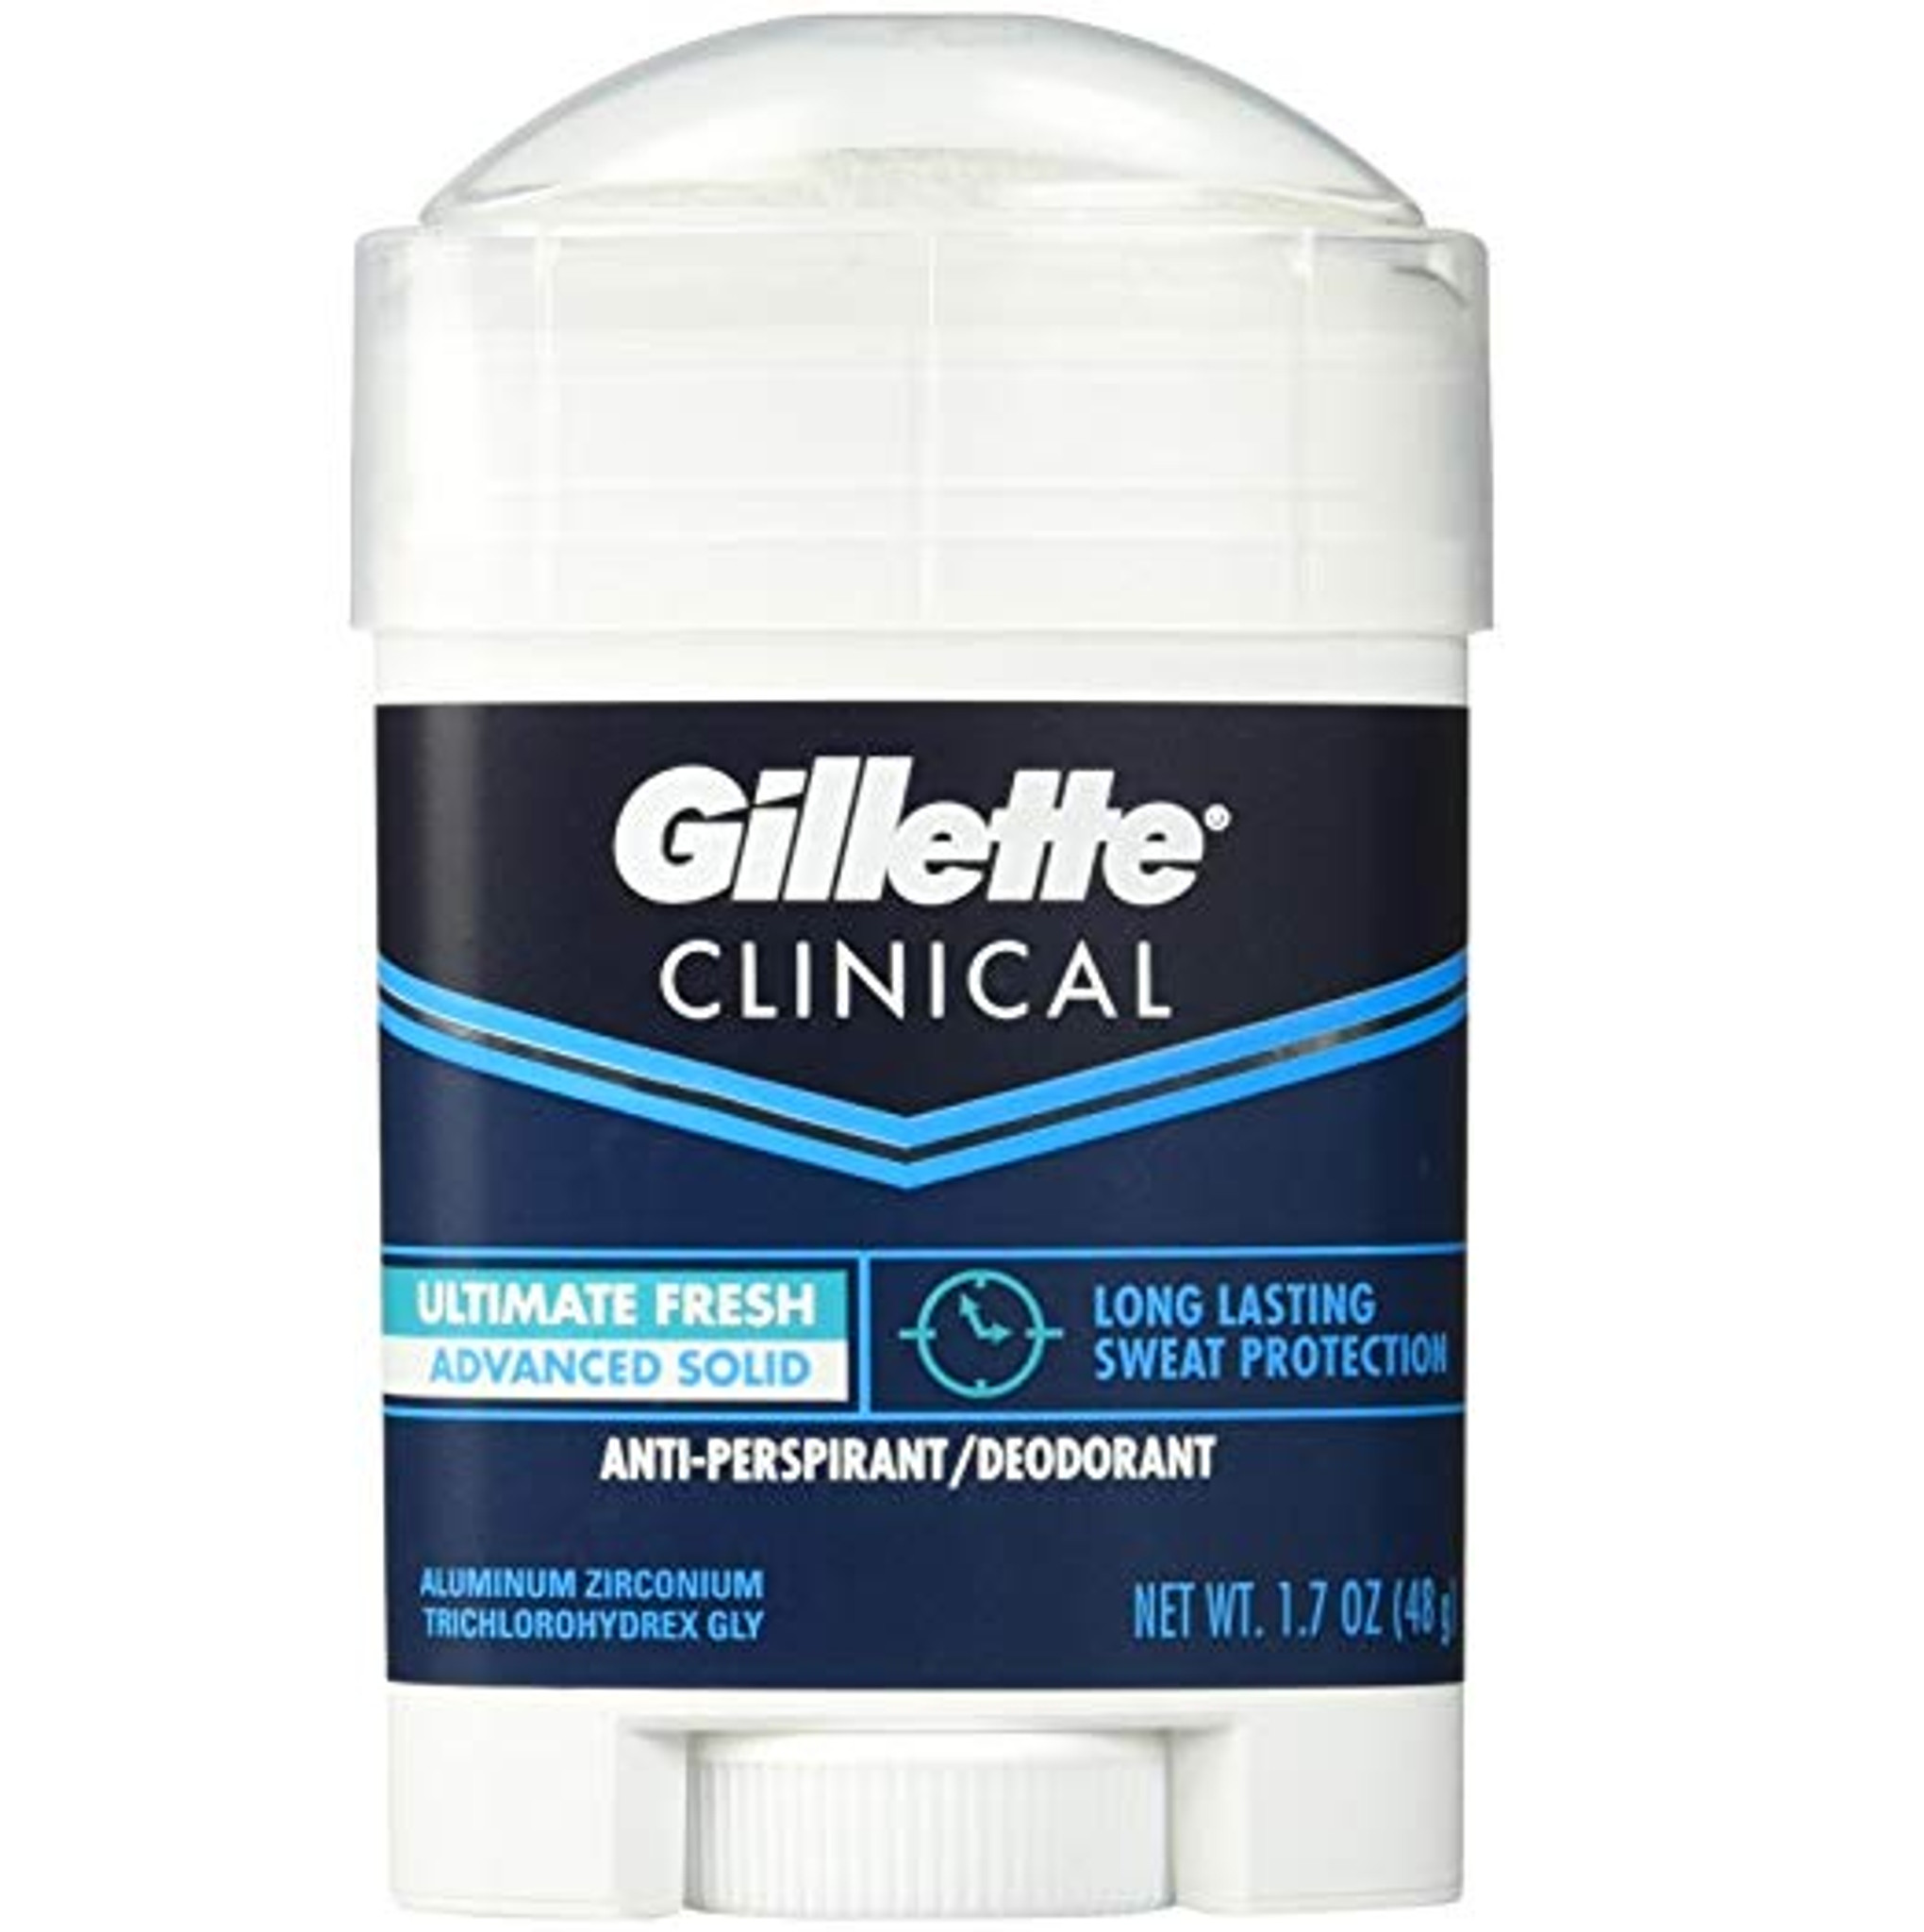 Gillette Clinical Anti-Perspirant Deodorant Ultimate Fresh